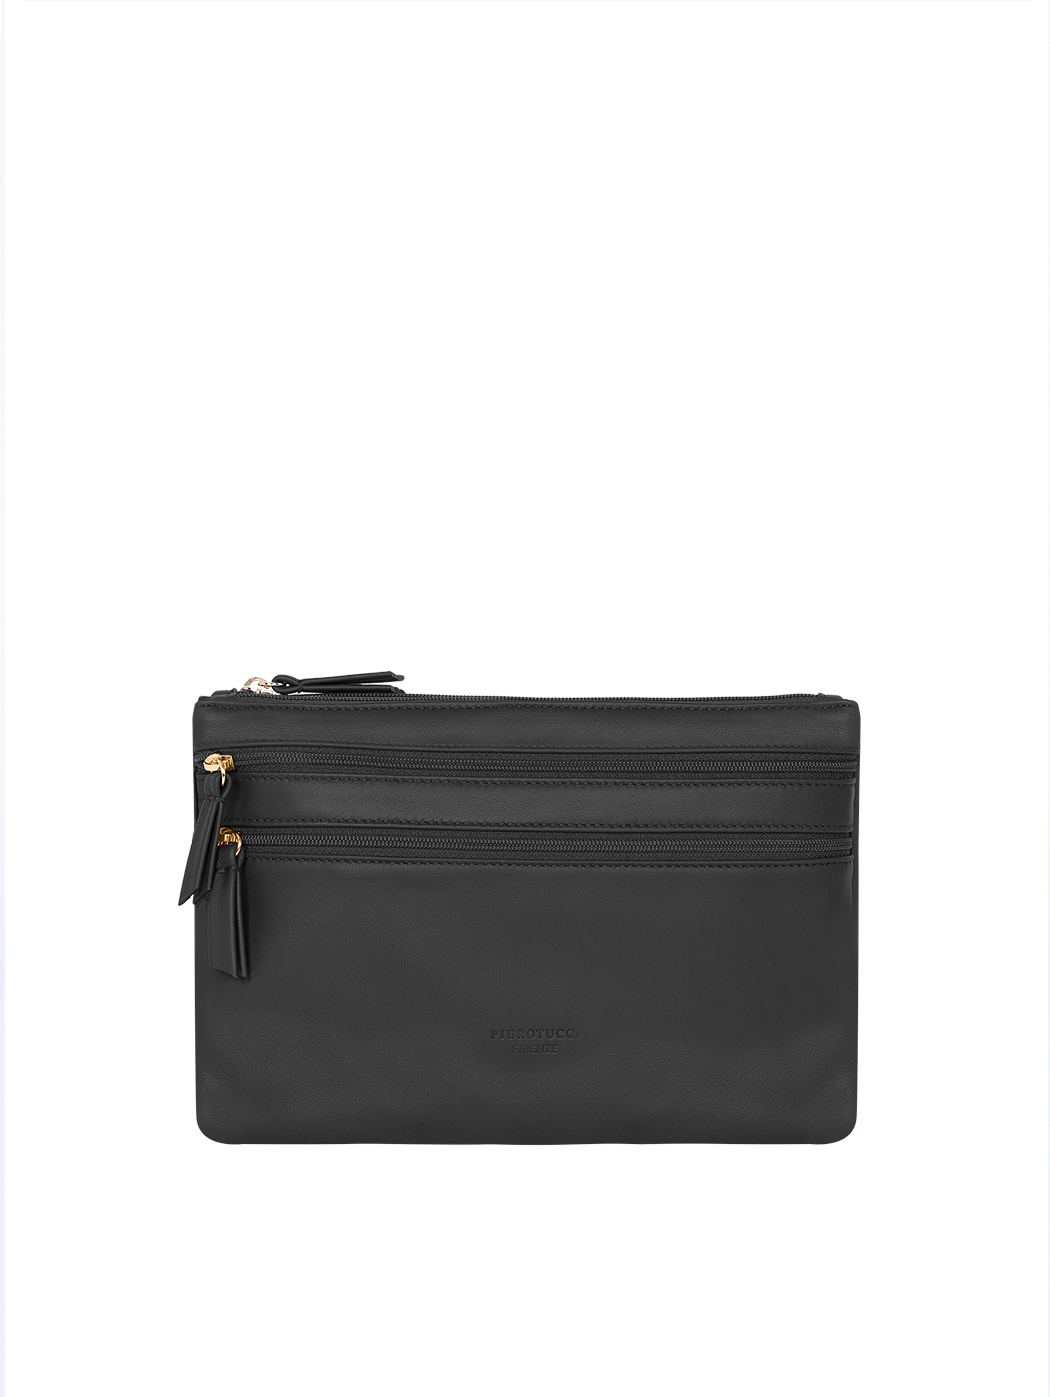 Black Convertible Crossbody Clutch Bag